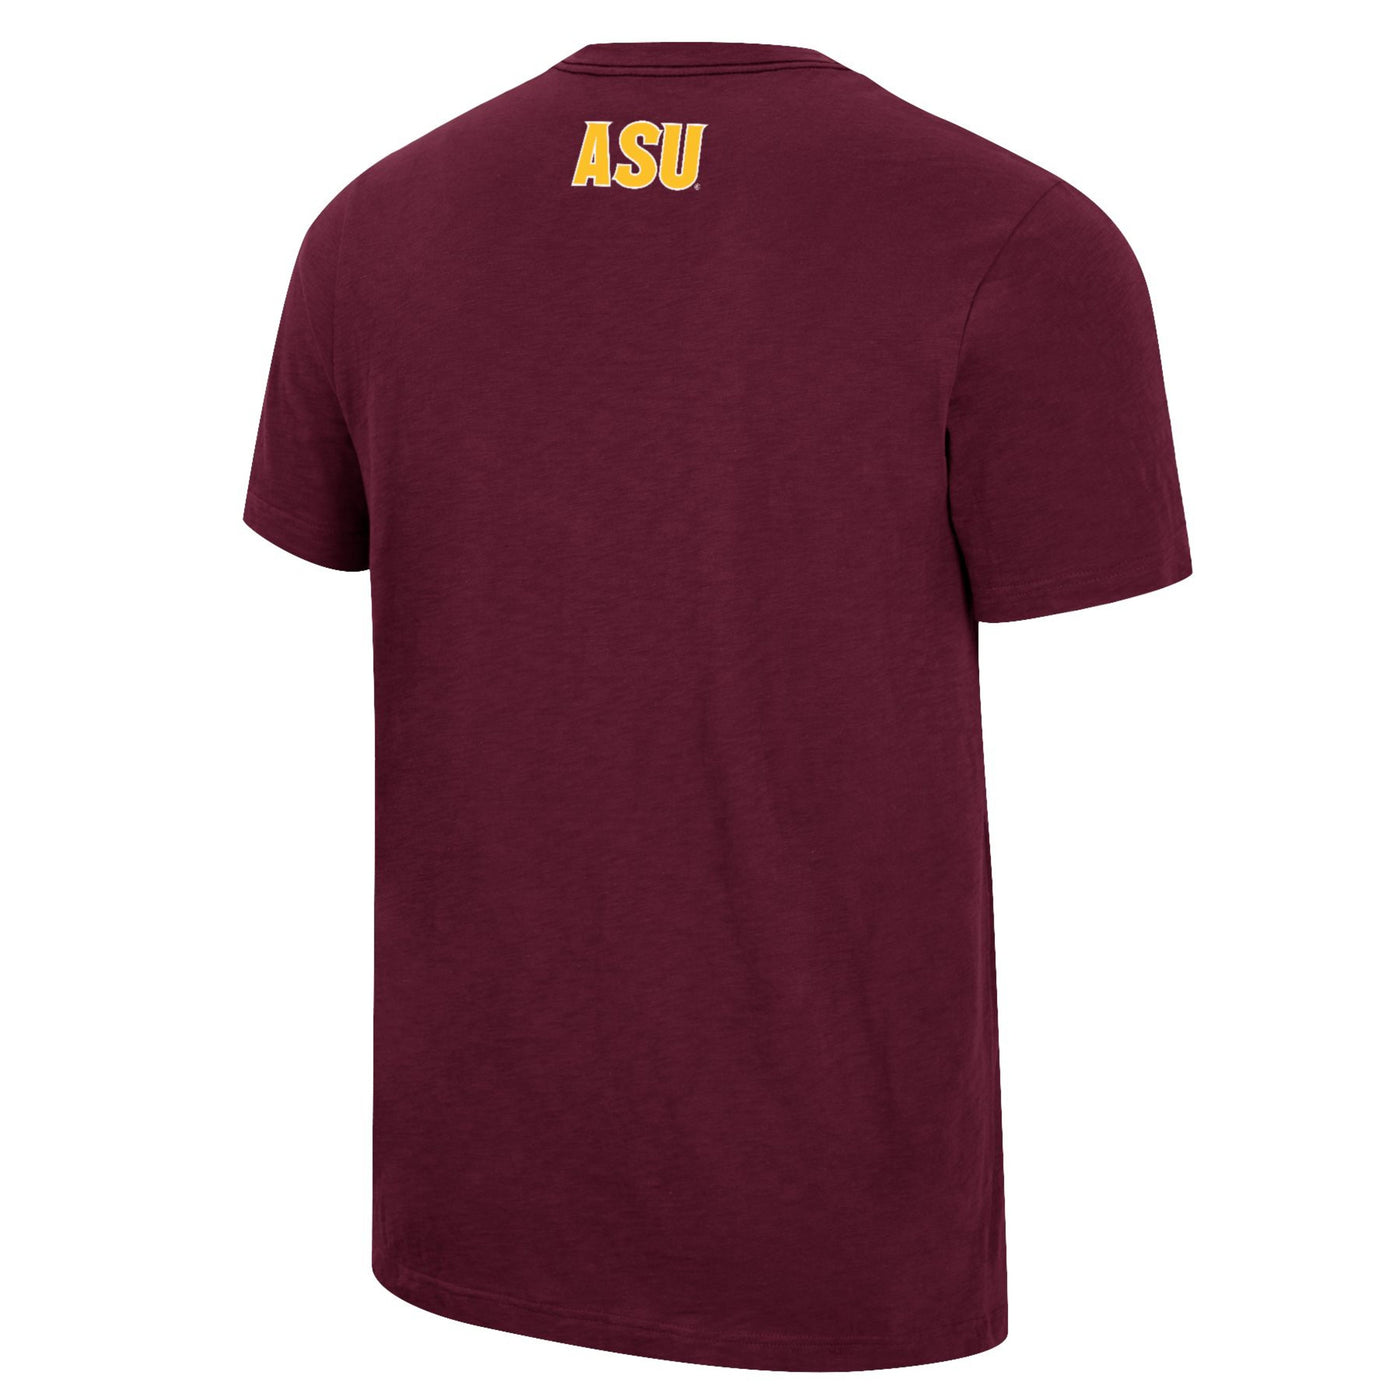 Backside of ASU maroon t-shirt with the small ASU logo